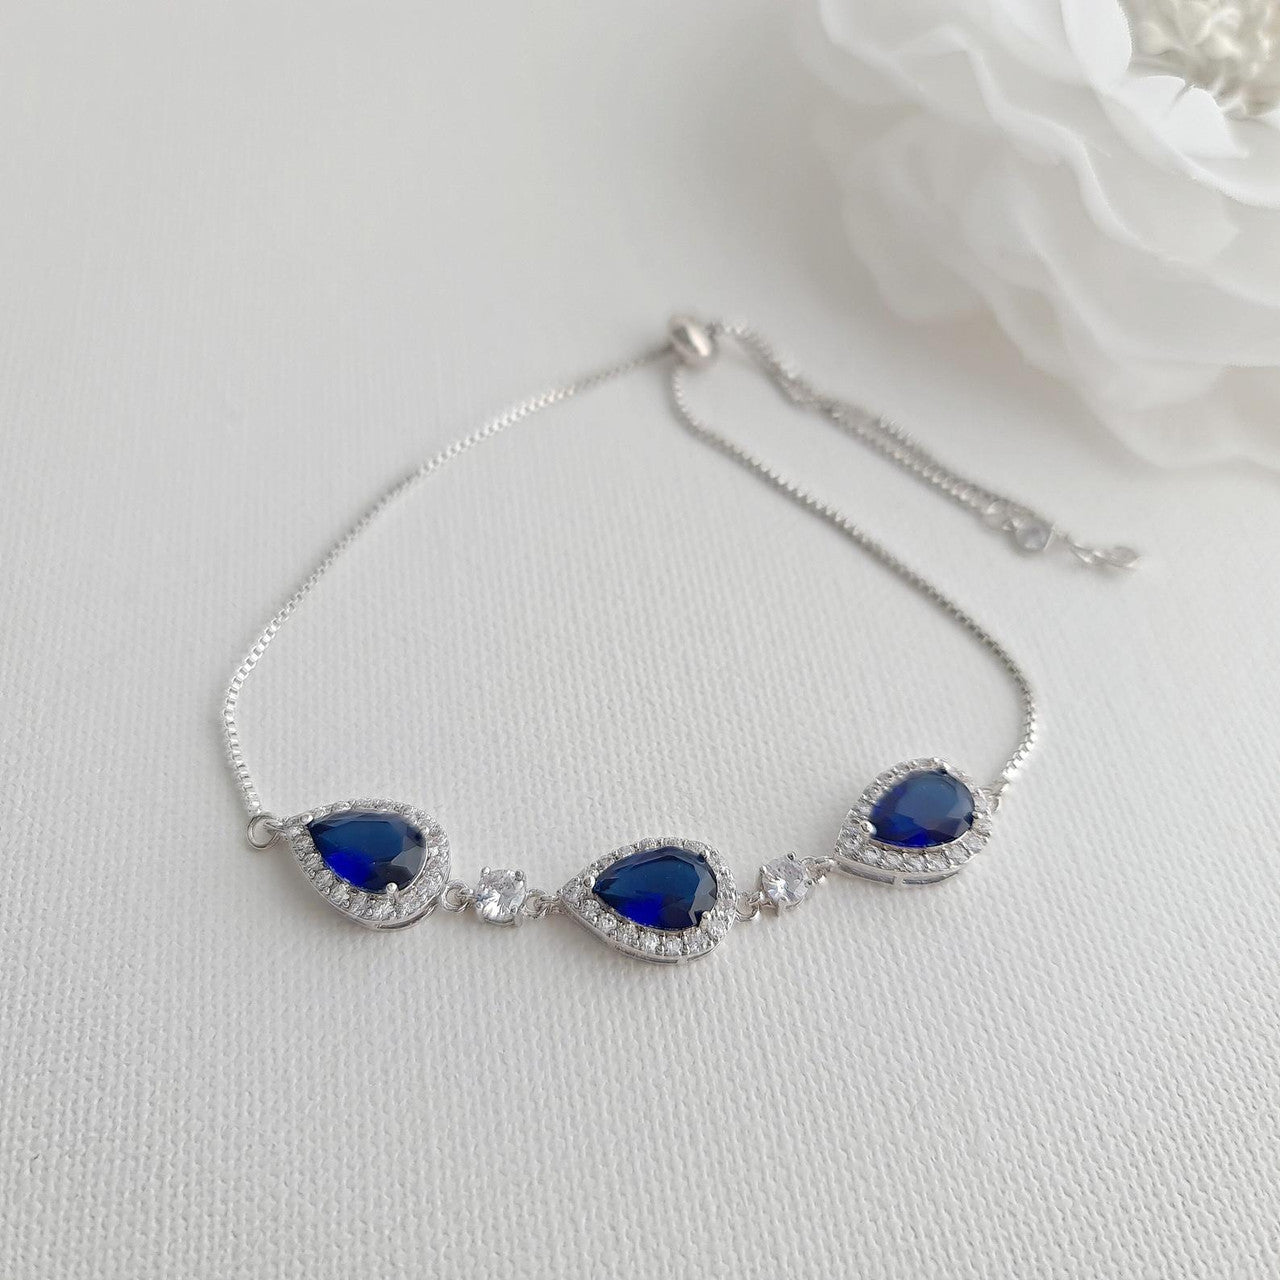 Simple Blue Bracelet in Gold for Weddings-Aoi